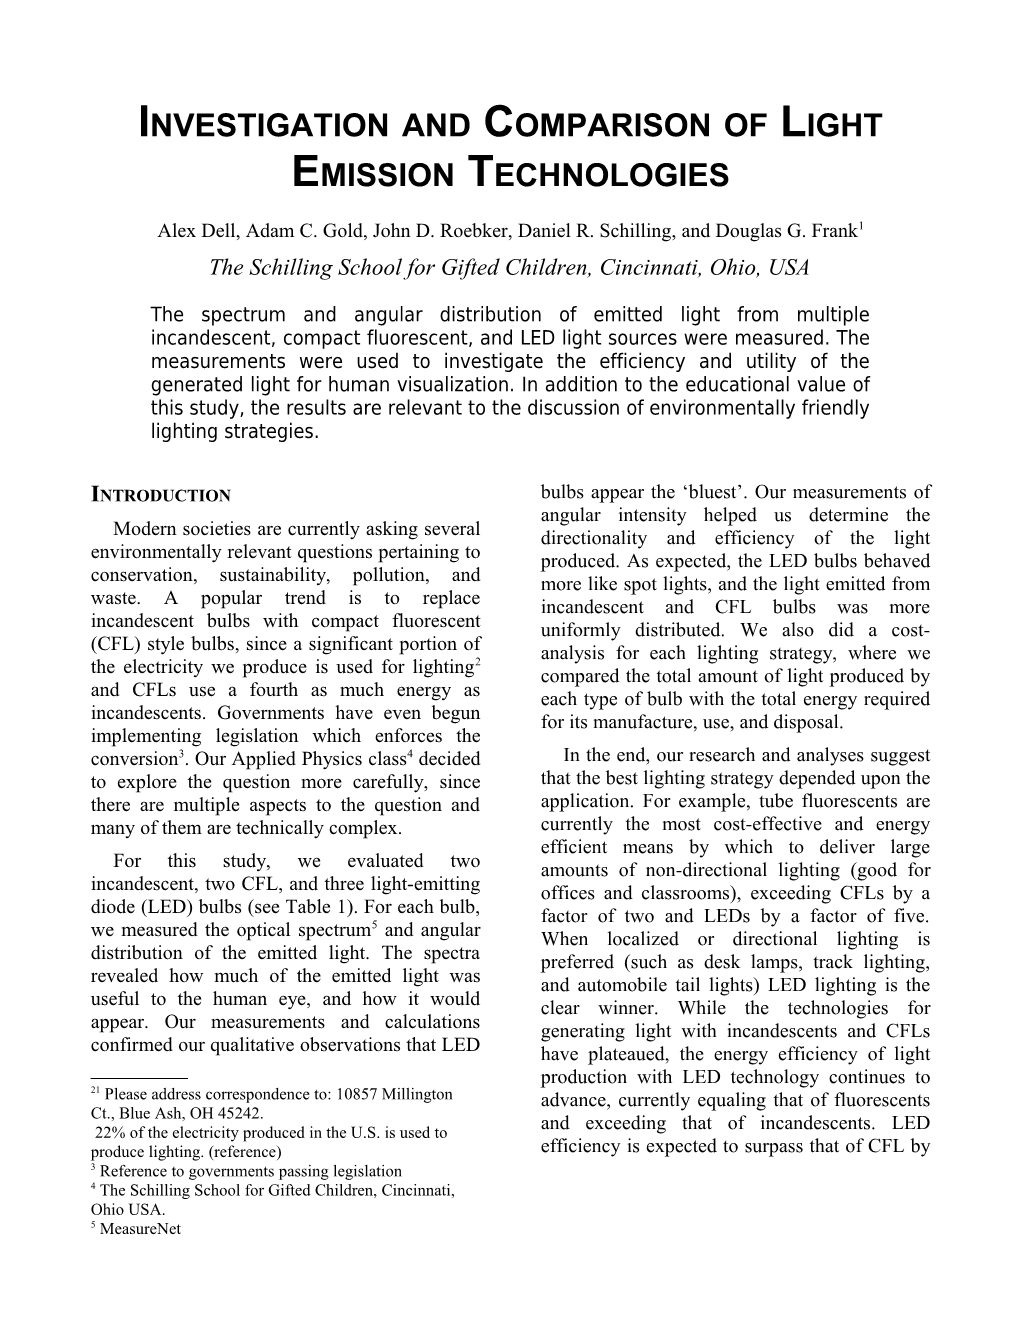 Measurement and Analysis of Light Emission